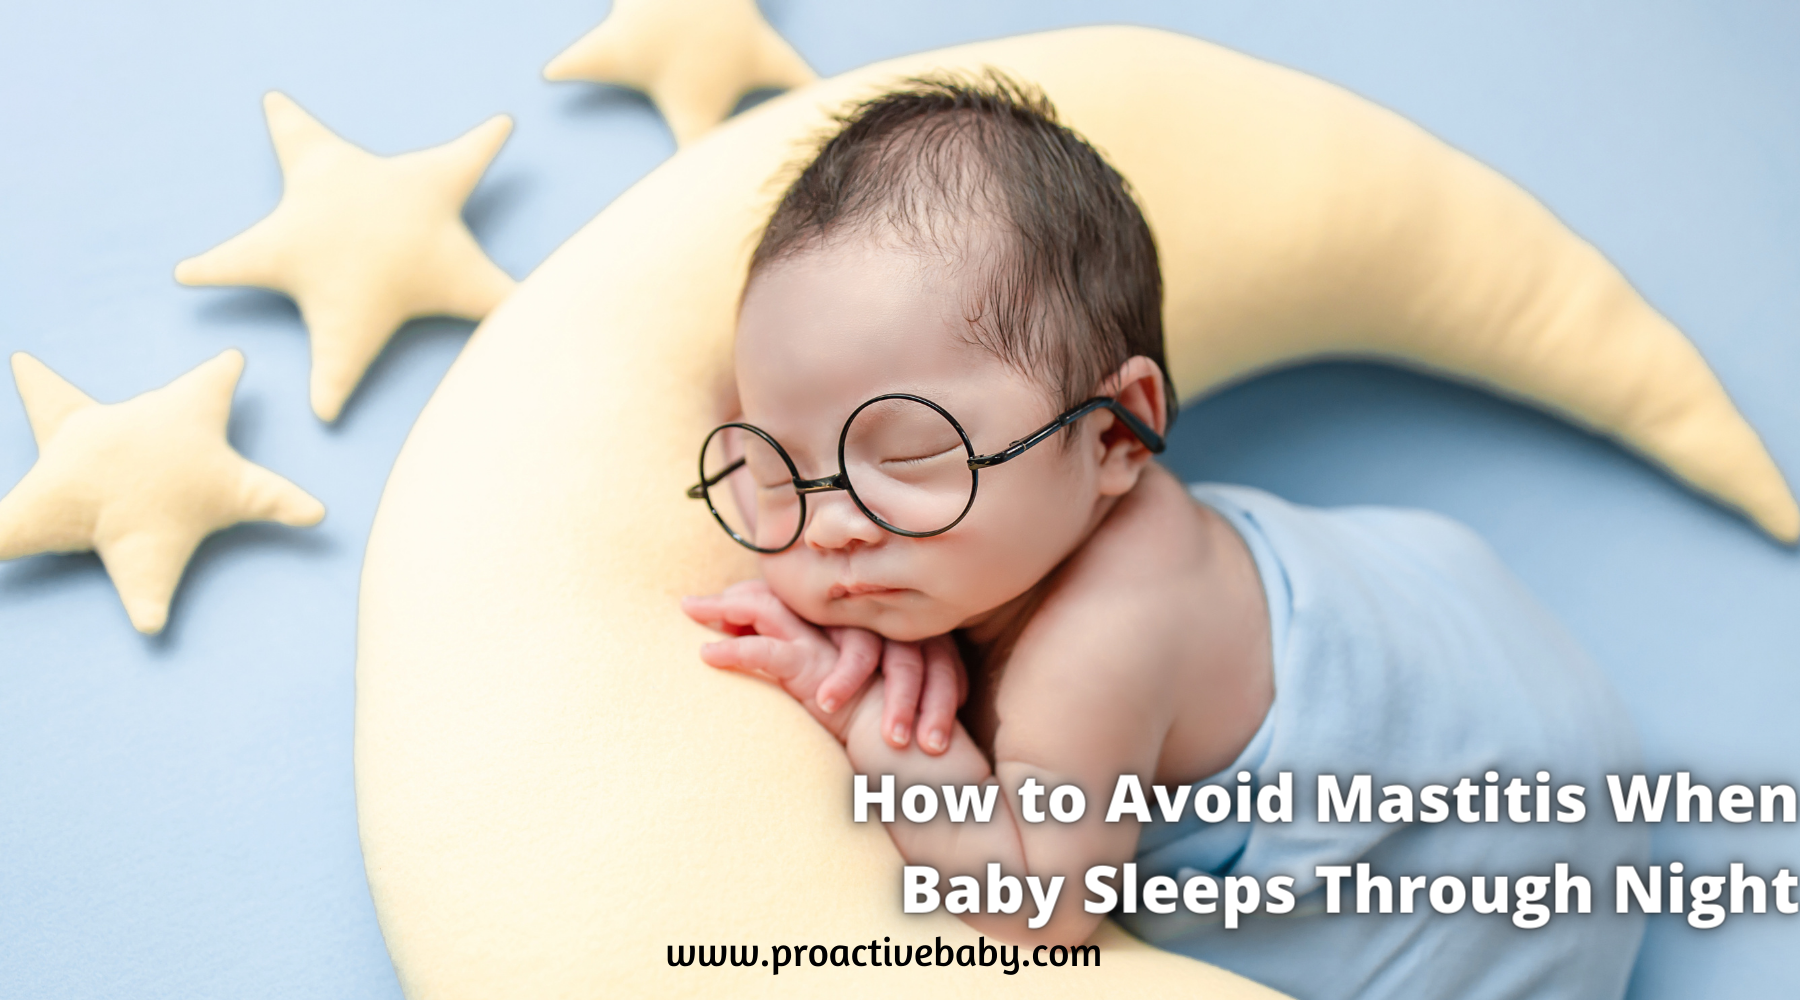 How to Avoid Mastitis When Baby Sleeps Through Night